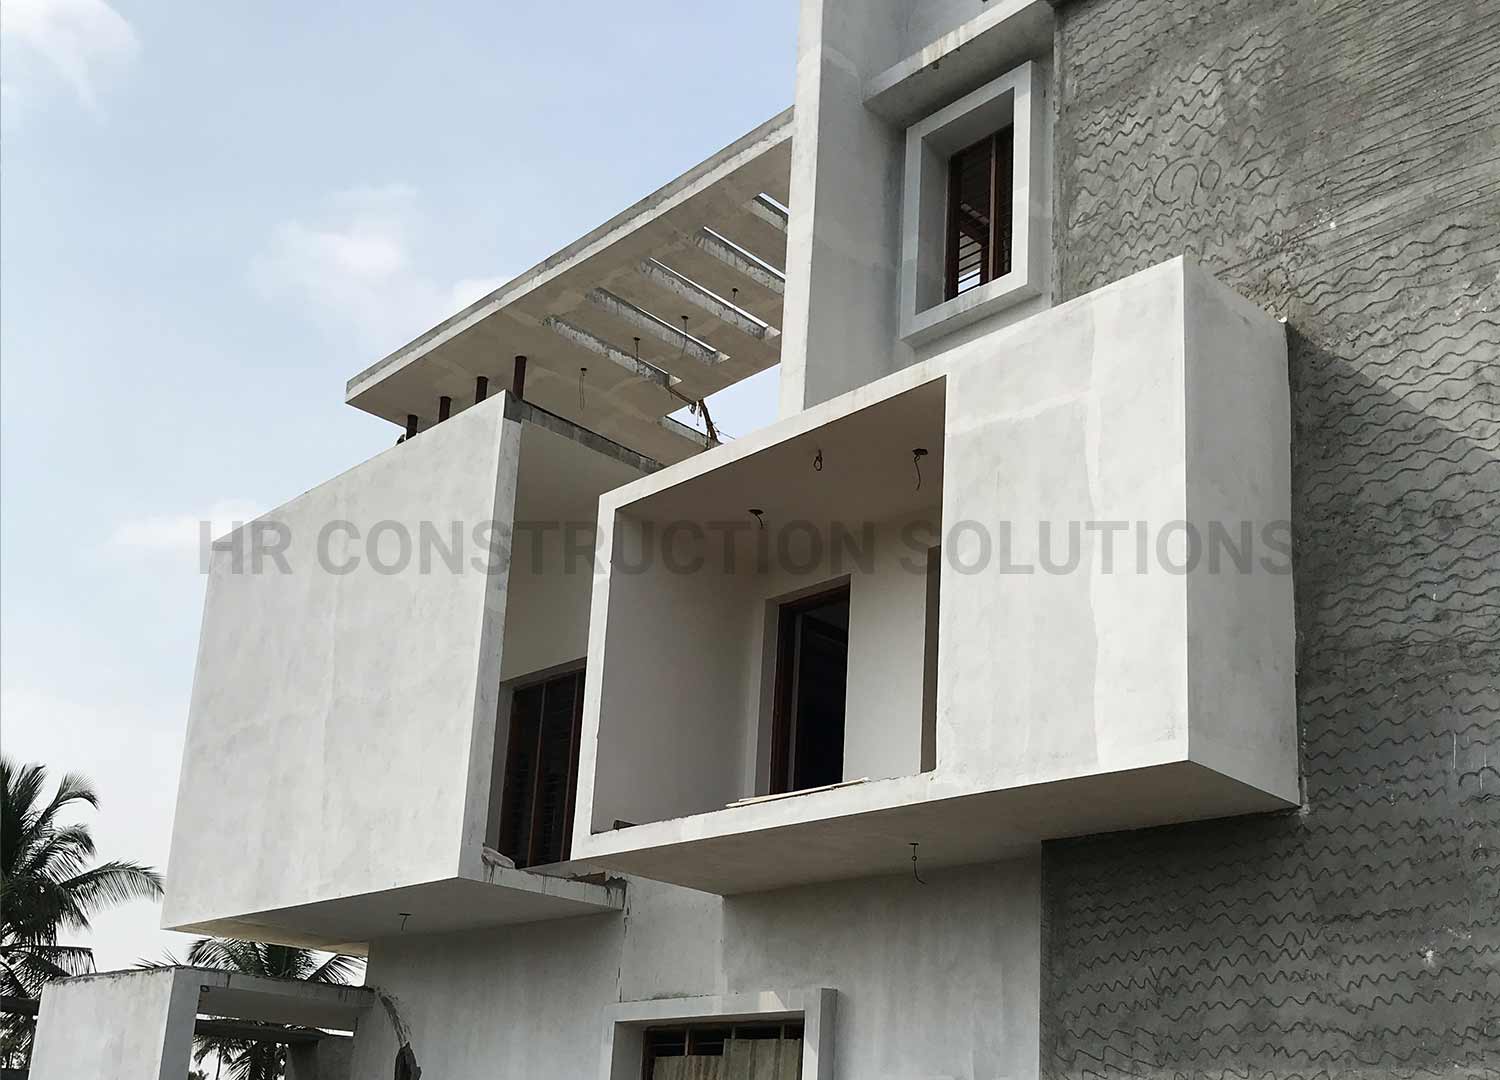 Exterior | HRConstructionsolutions I Bangalore